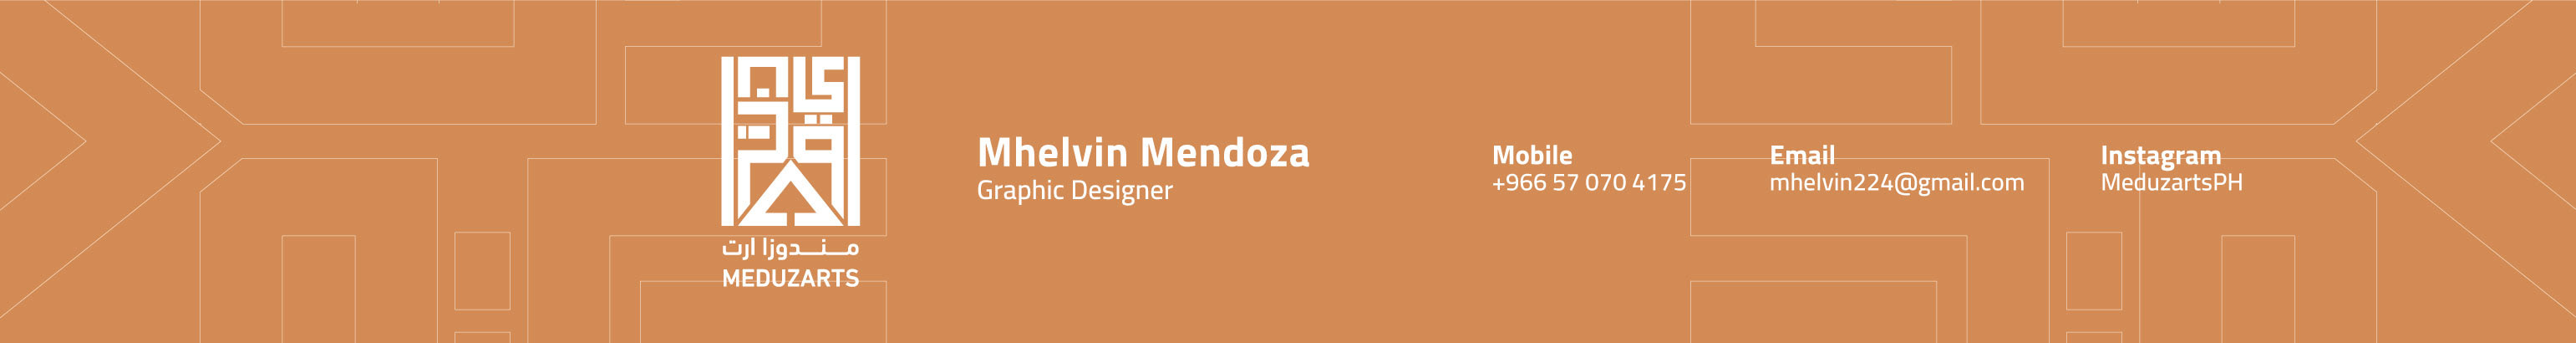 Profil-Banner von Mhelvin Mendoza